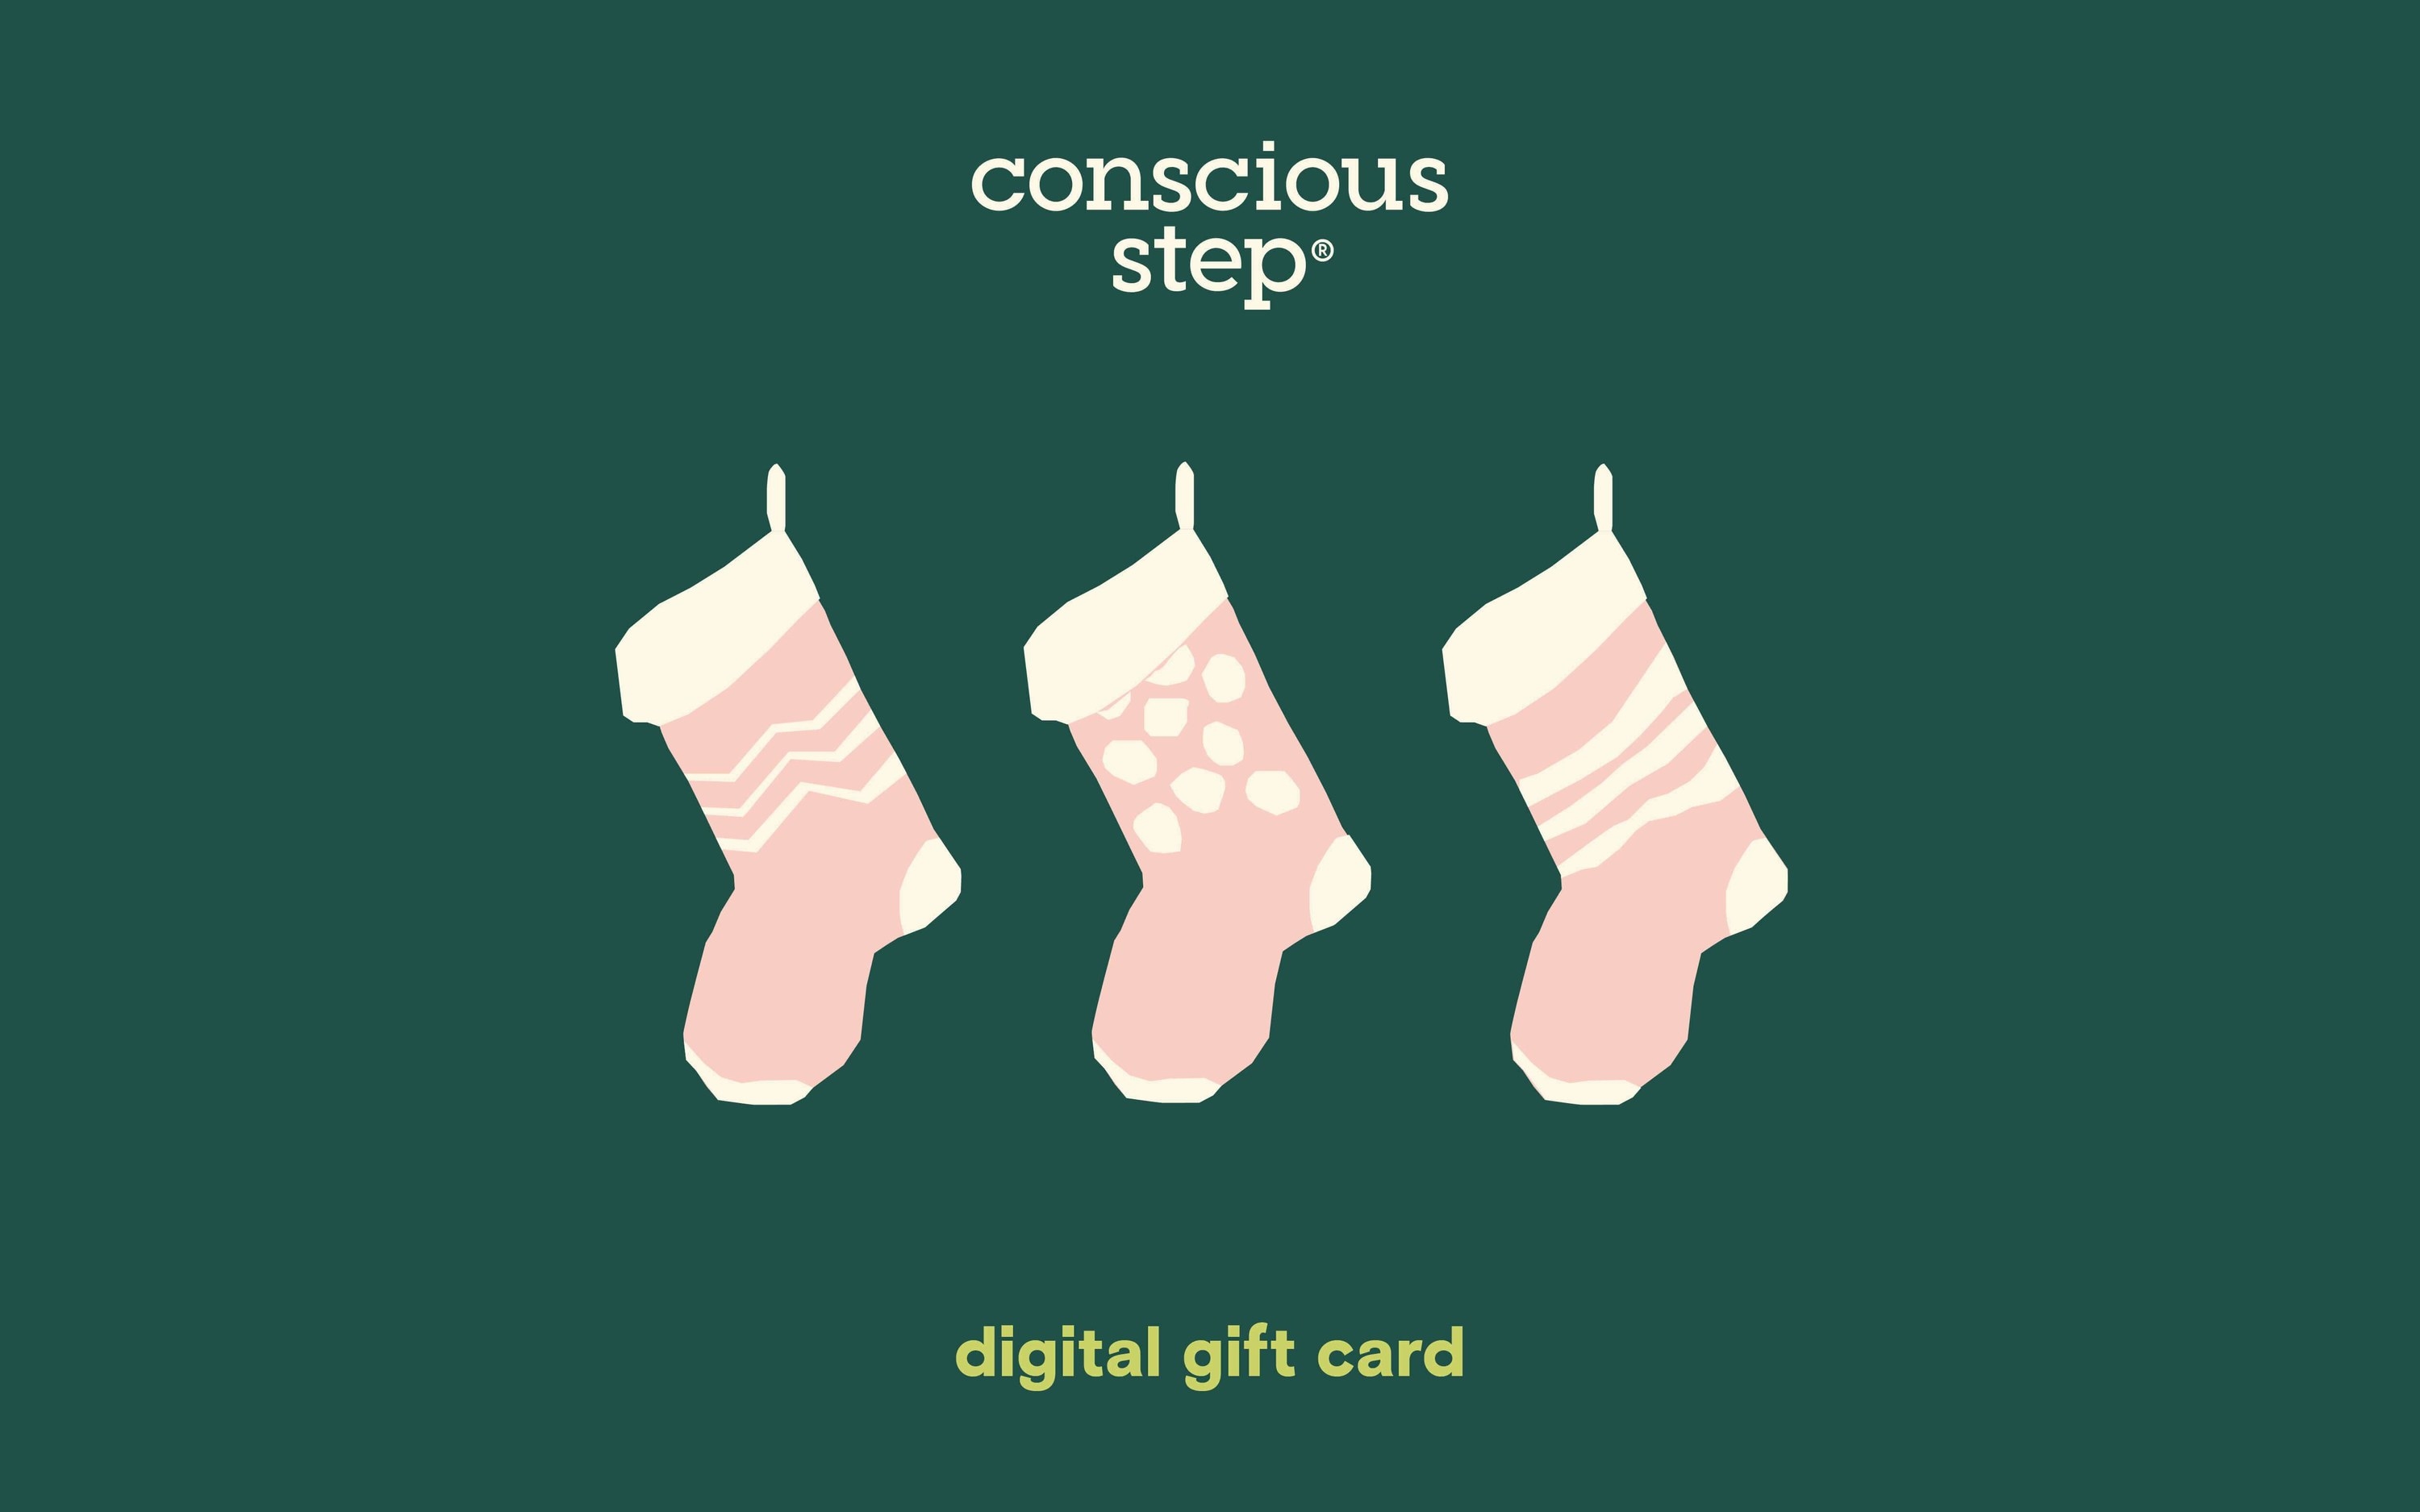 Design of Conscious Step digital gift card